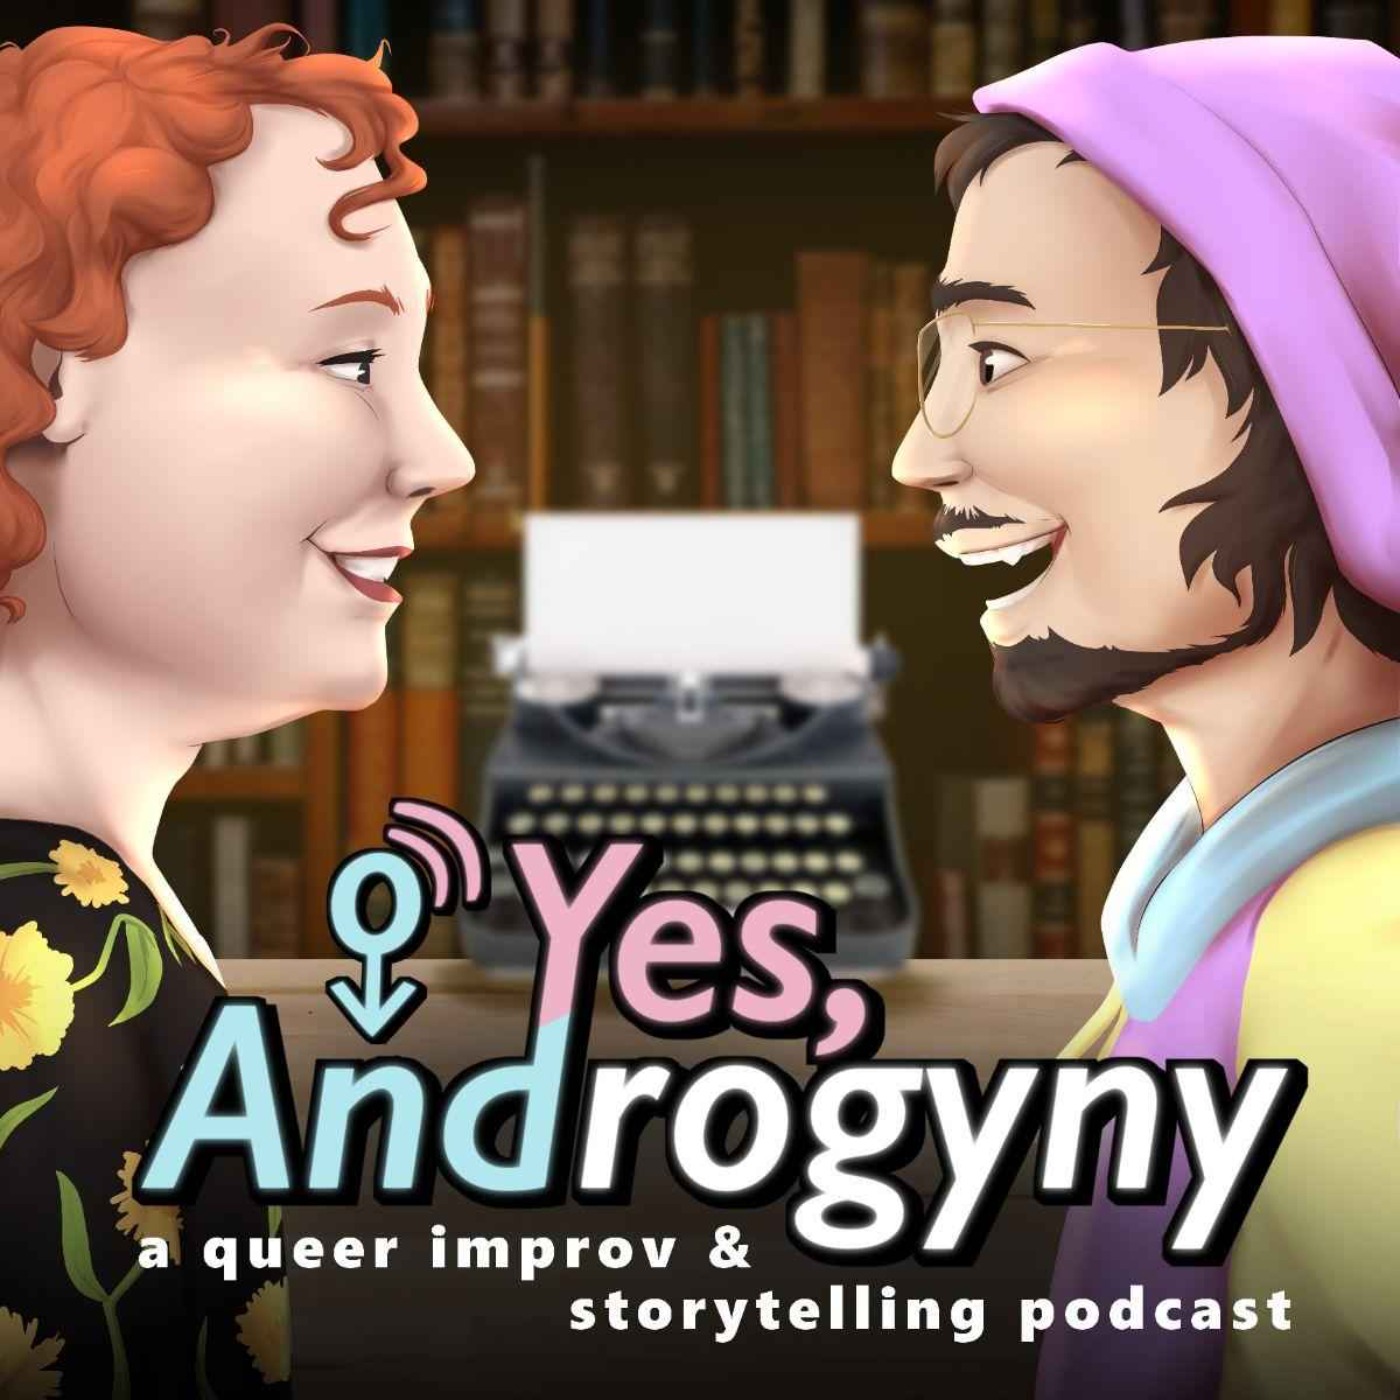 Yes, Androgyny - A Trans Improv and Storytelling Podcast